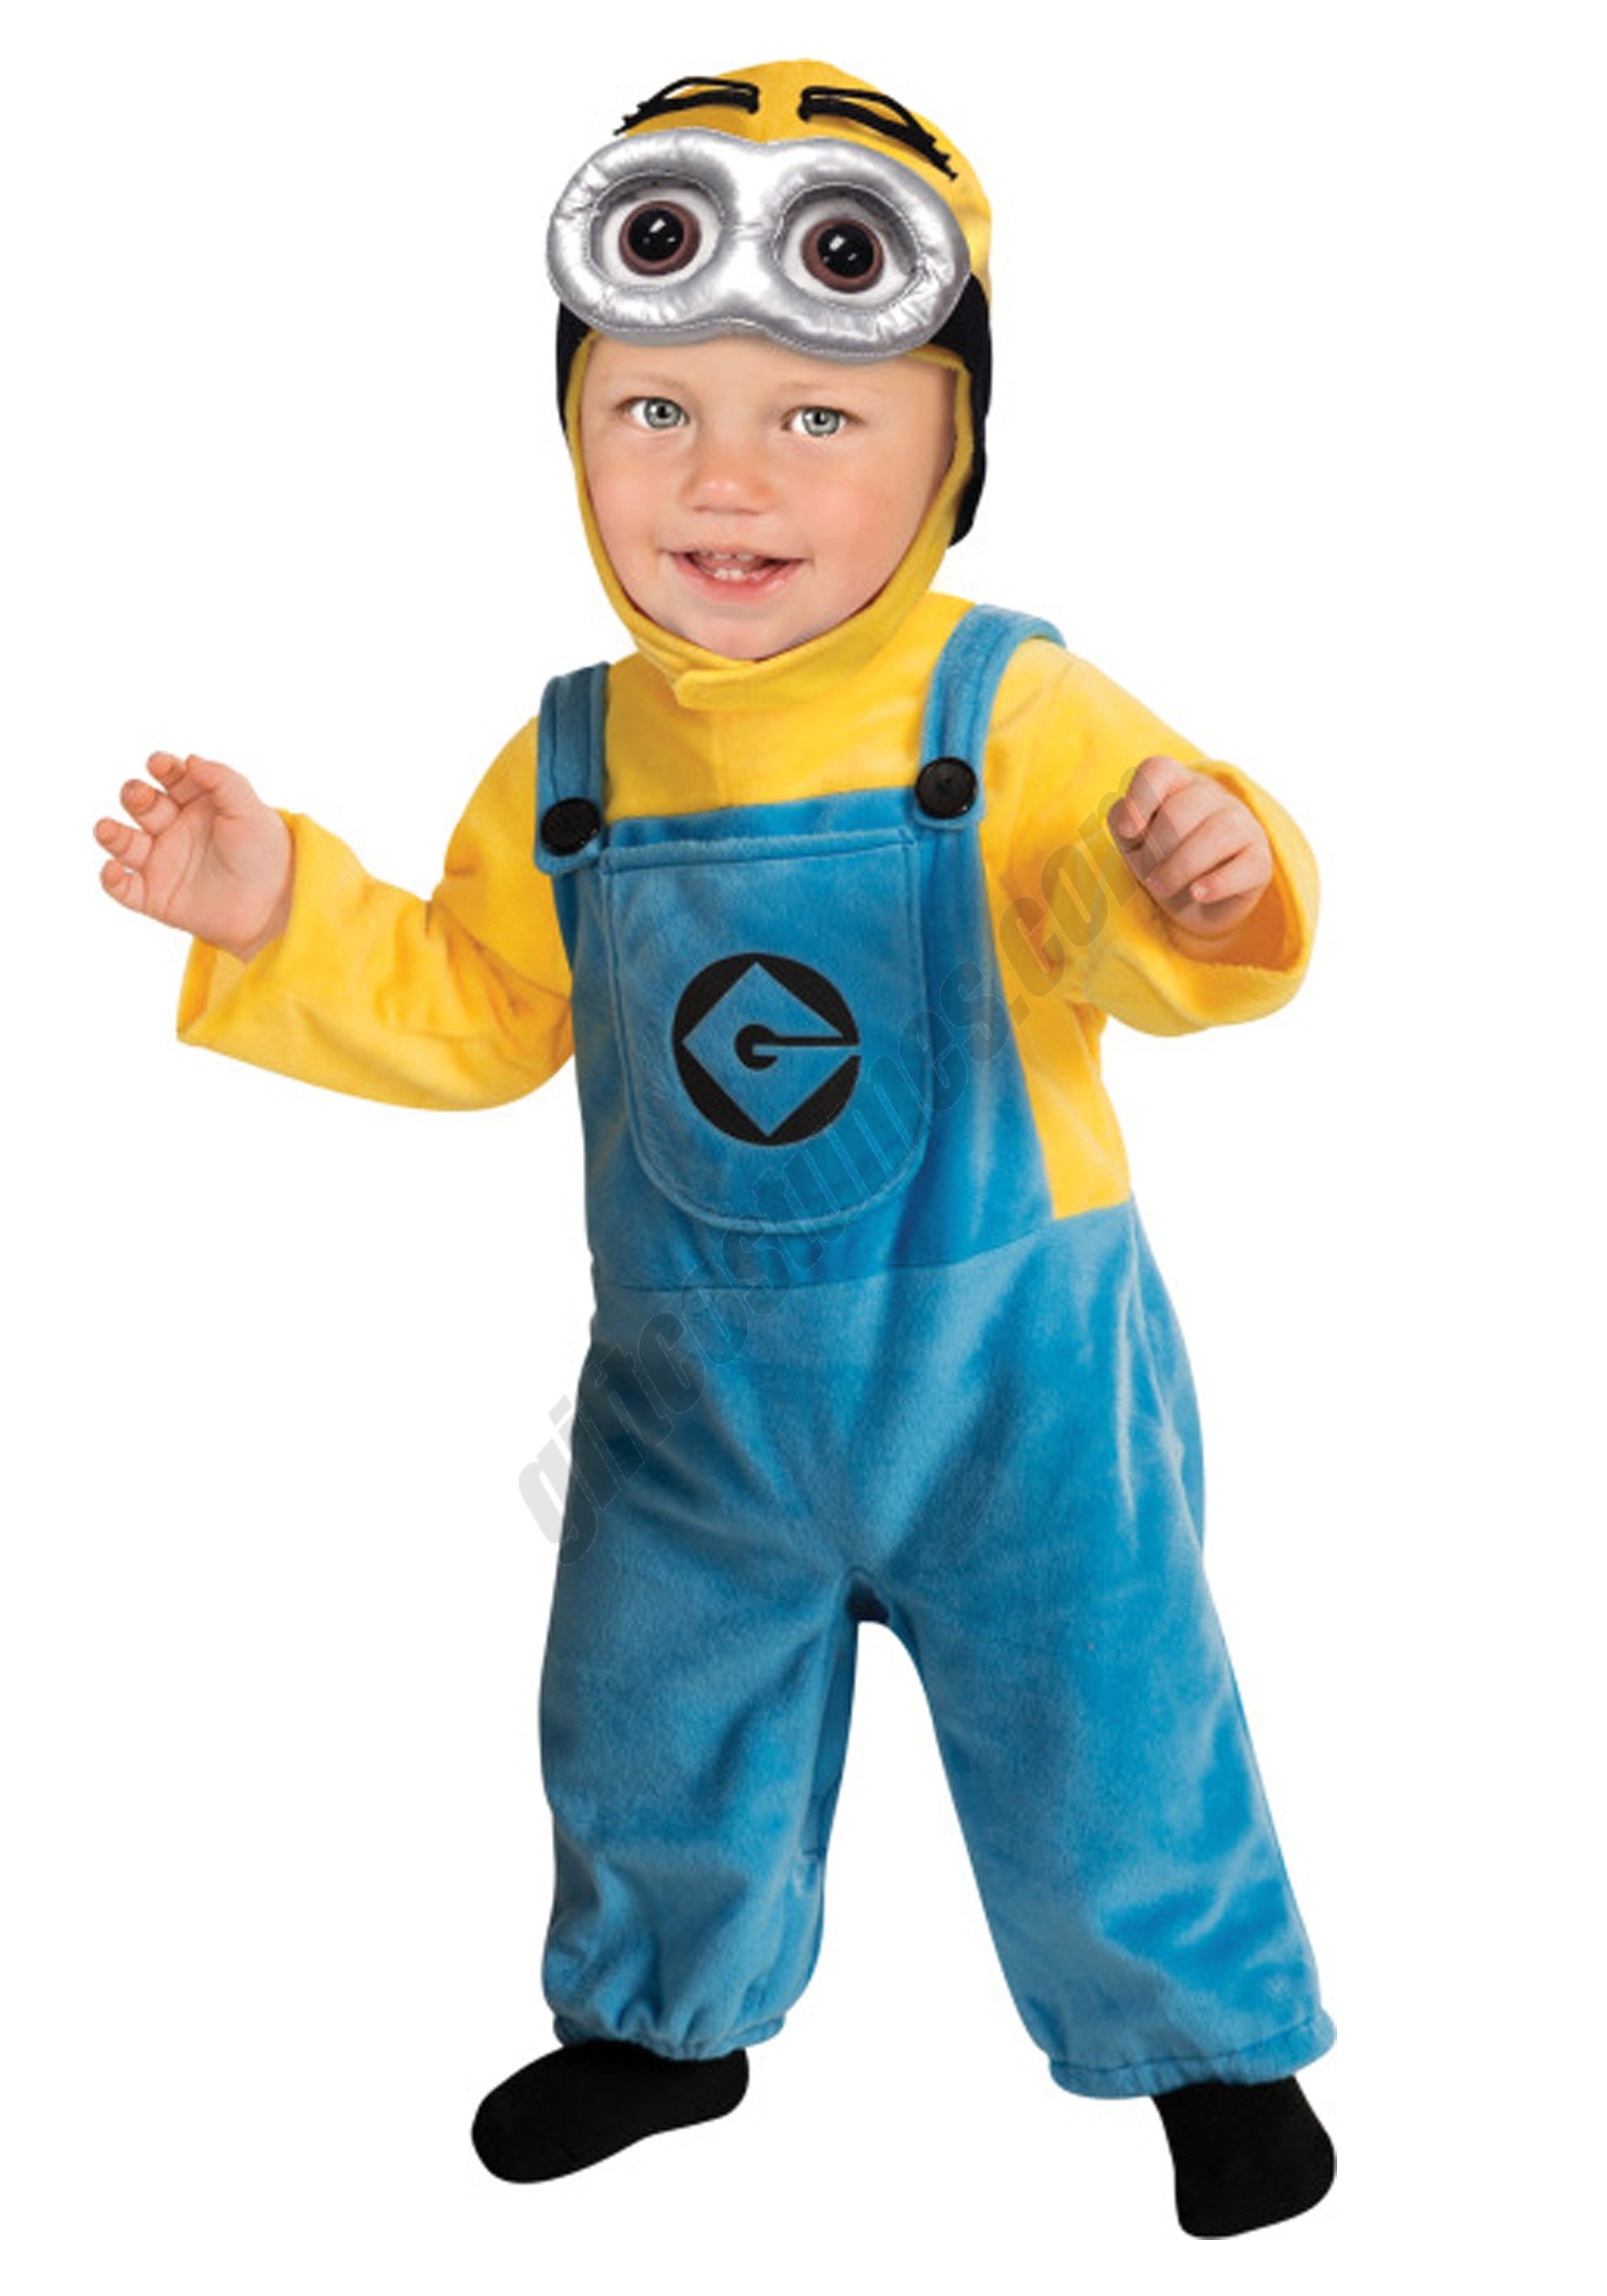 Minion Toddler Costume Promotions - Minion Toddler Costume Promotions